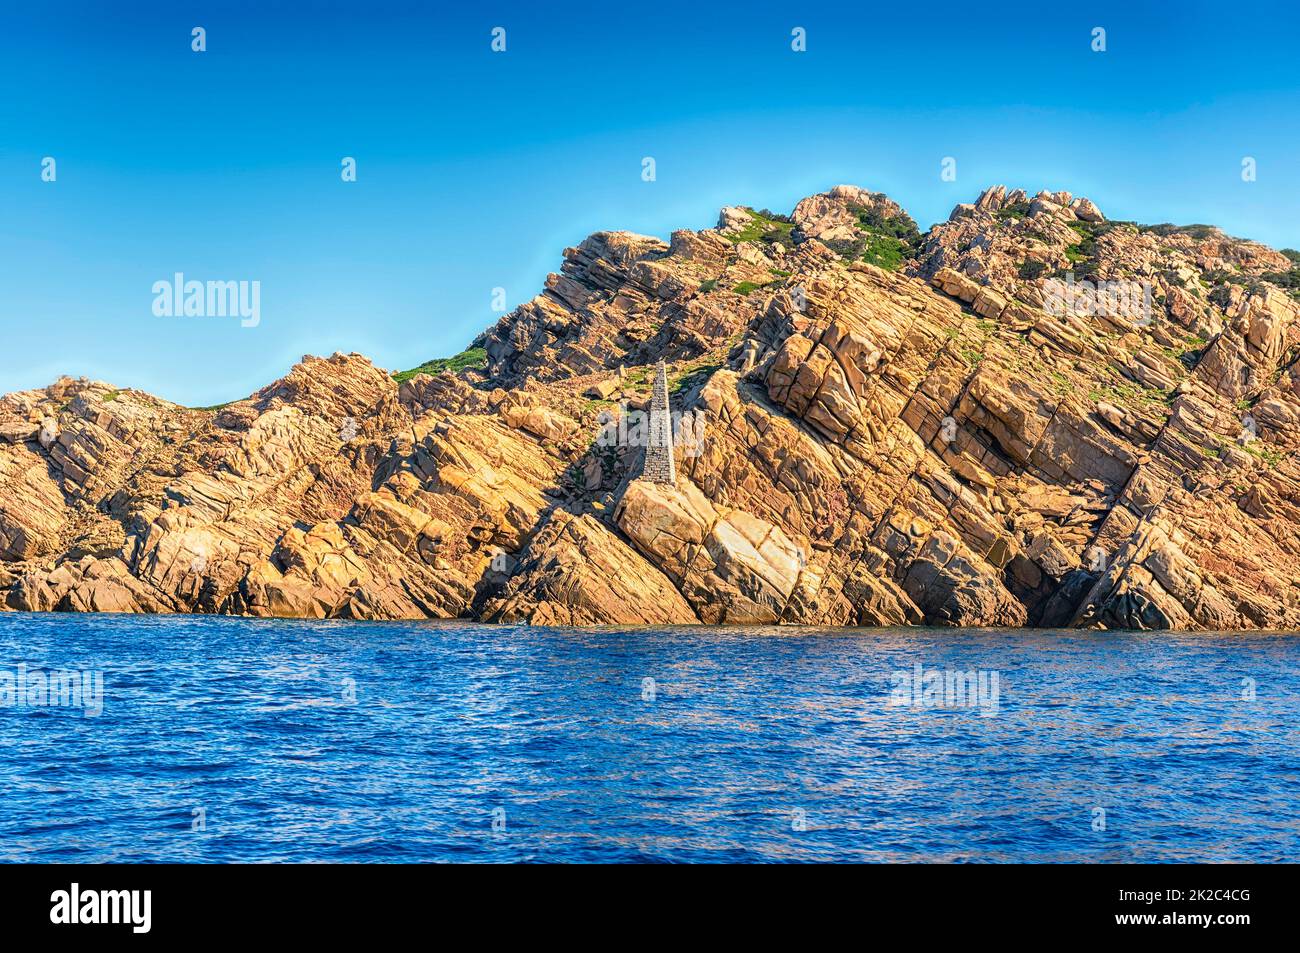 View of the coast in the Island of Budelli, Maddalena Archipelago, near the strait of Bonifacio in northern Sardinia, Italy Stock Photo